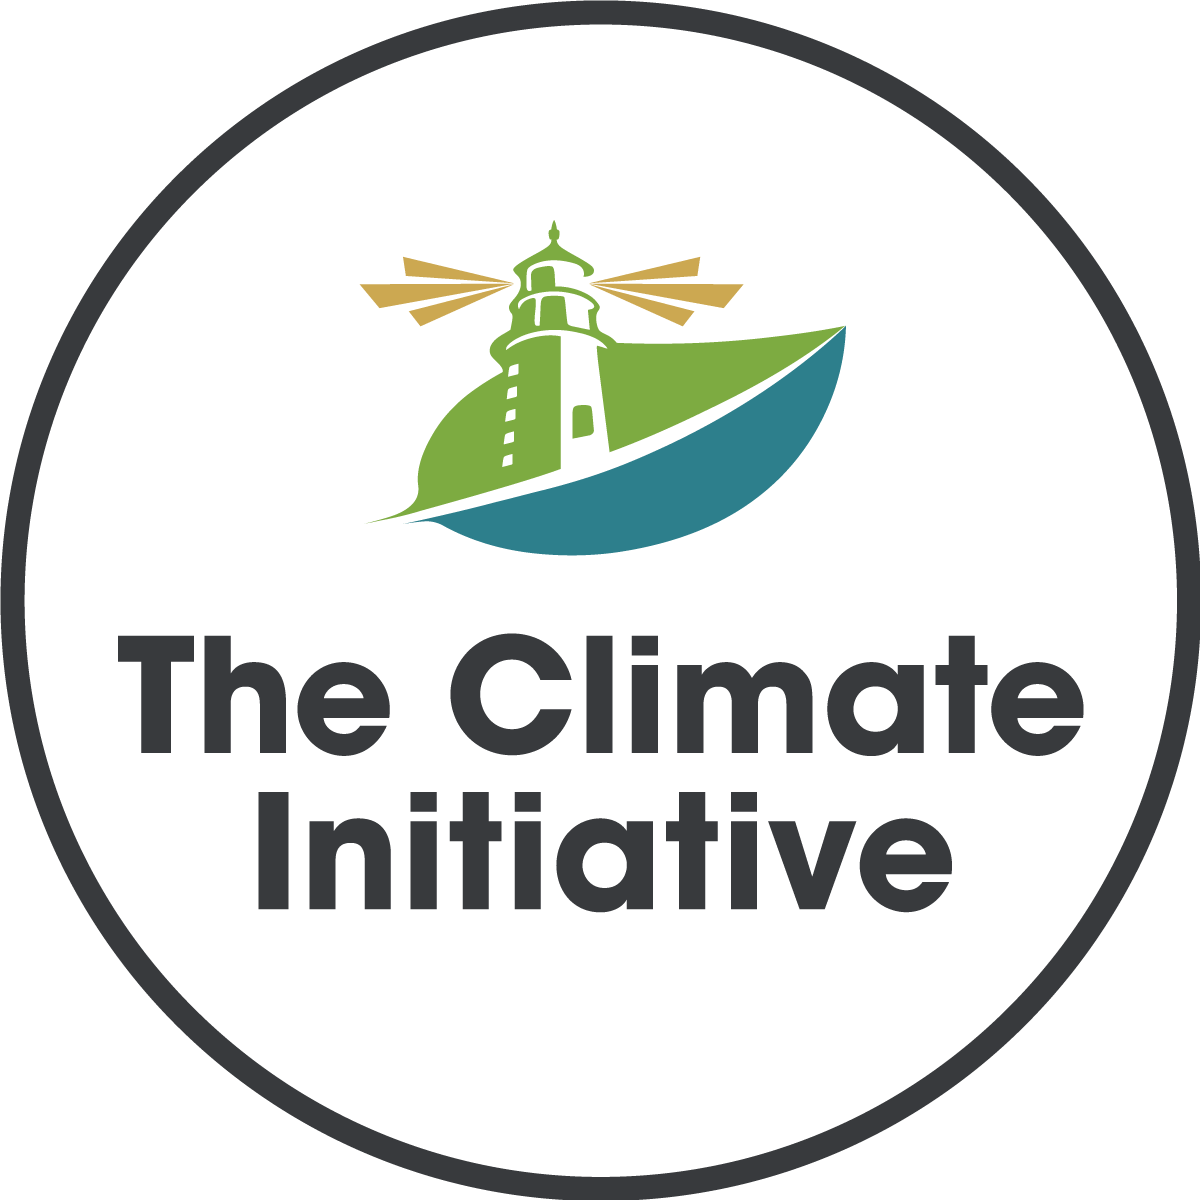 The Climate Initiative